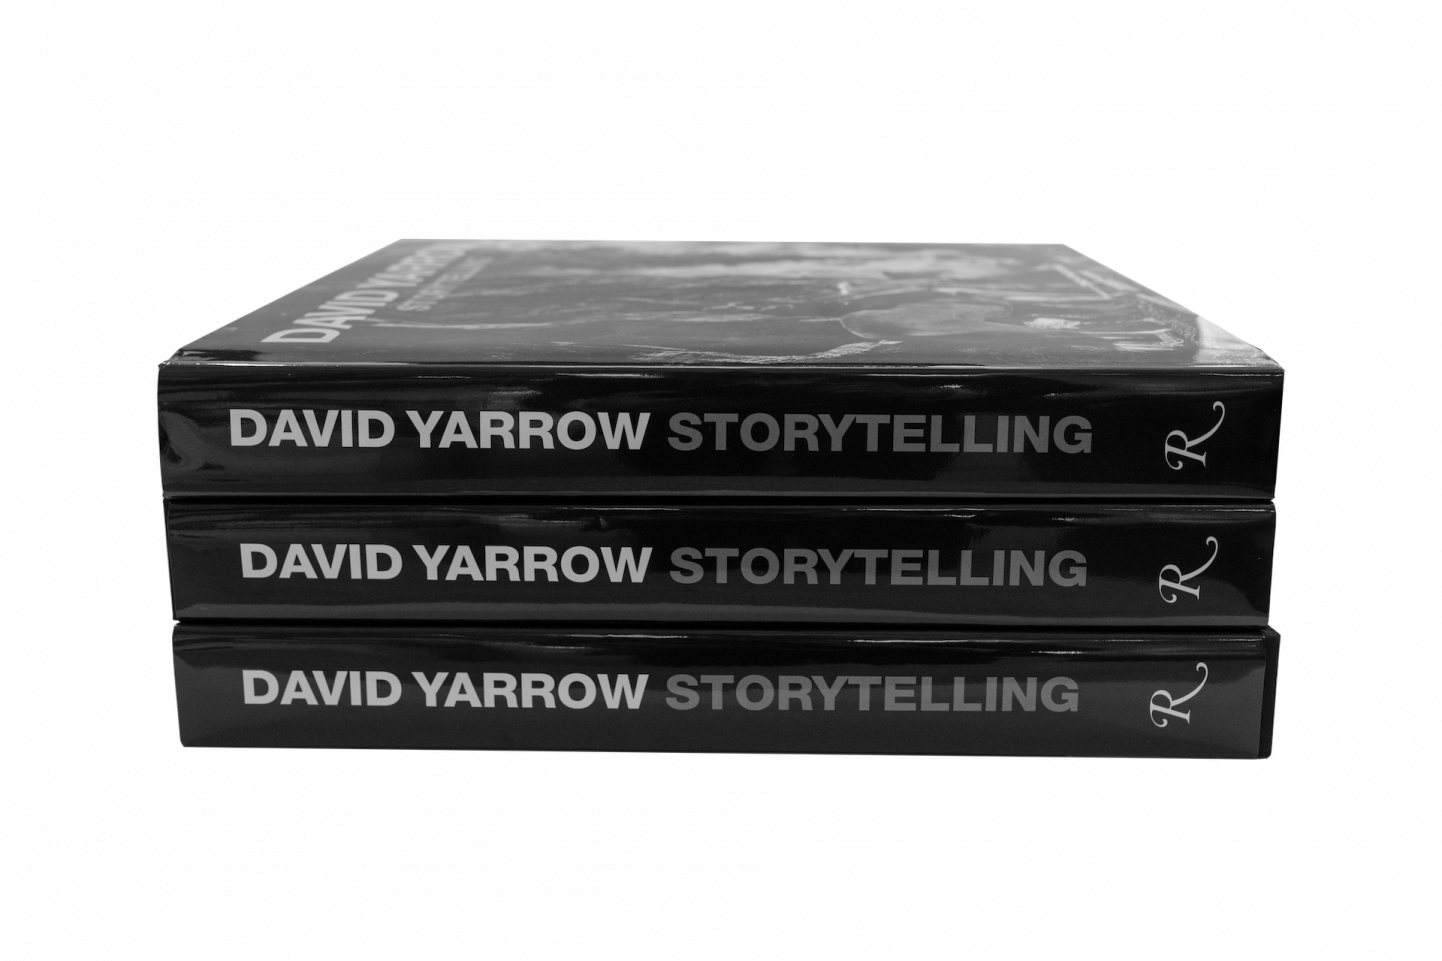 Storytelling books by David Yarrow